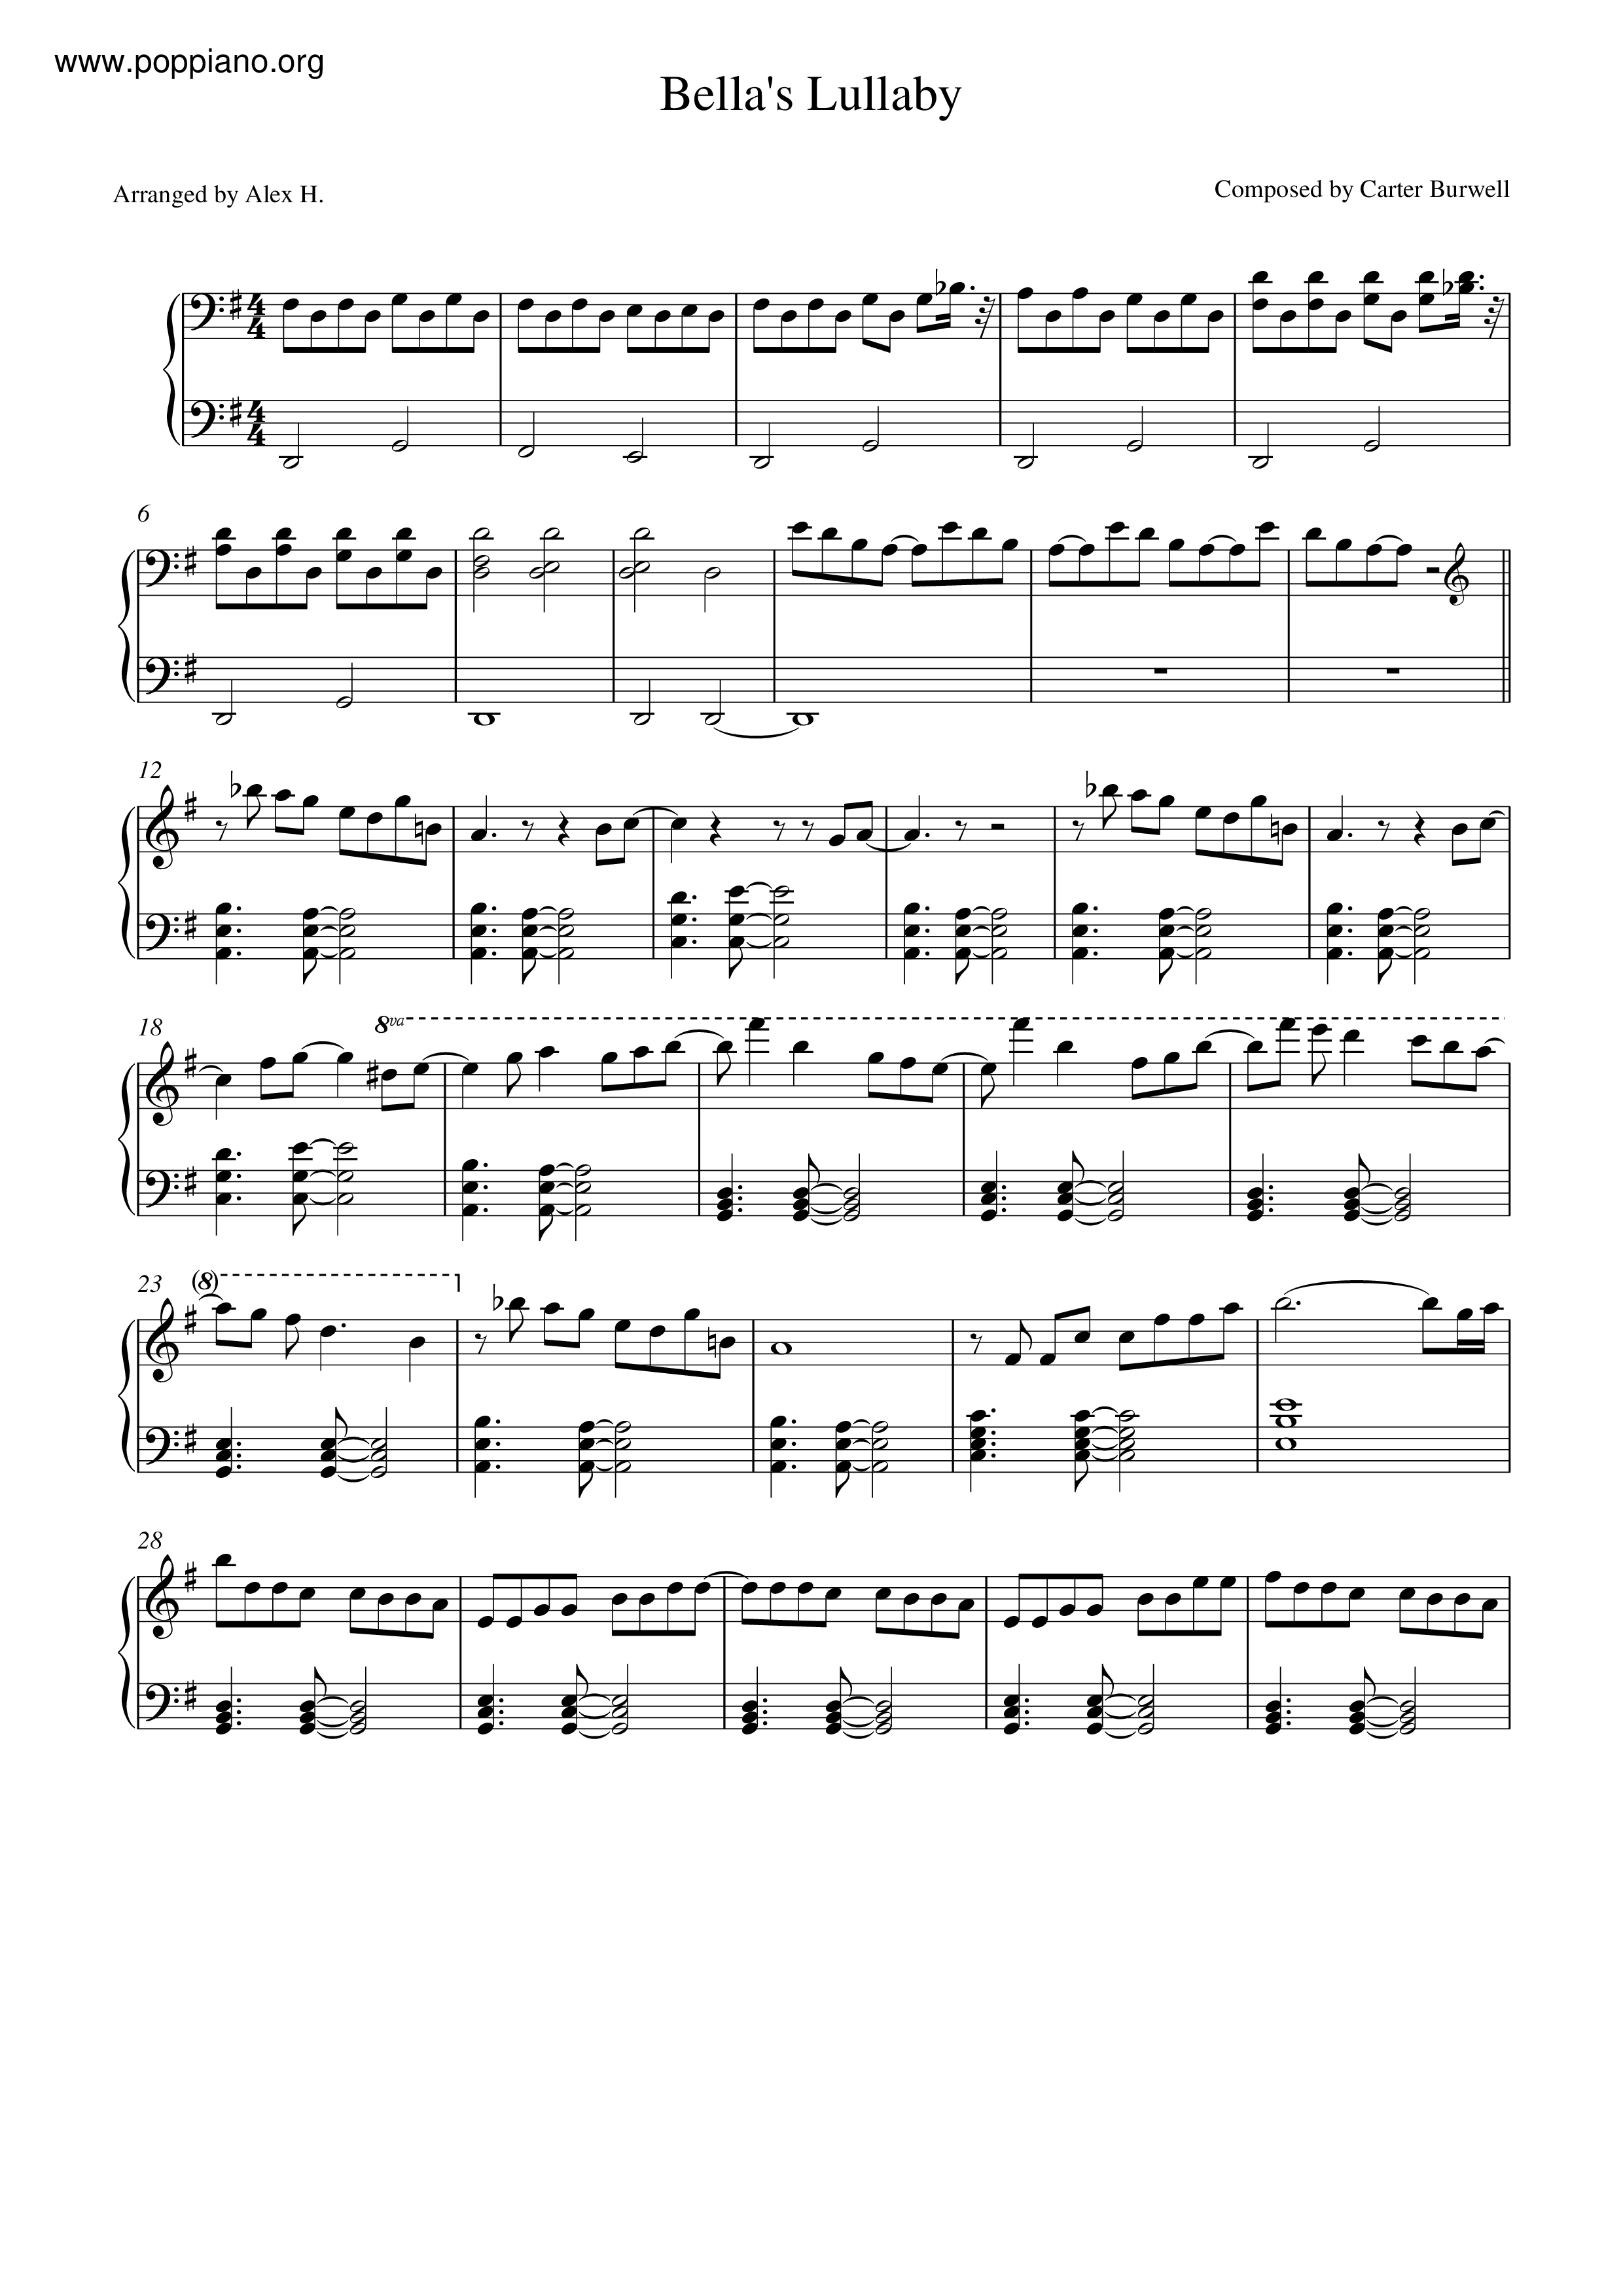 Twilight - Bella's Lullaby Score